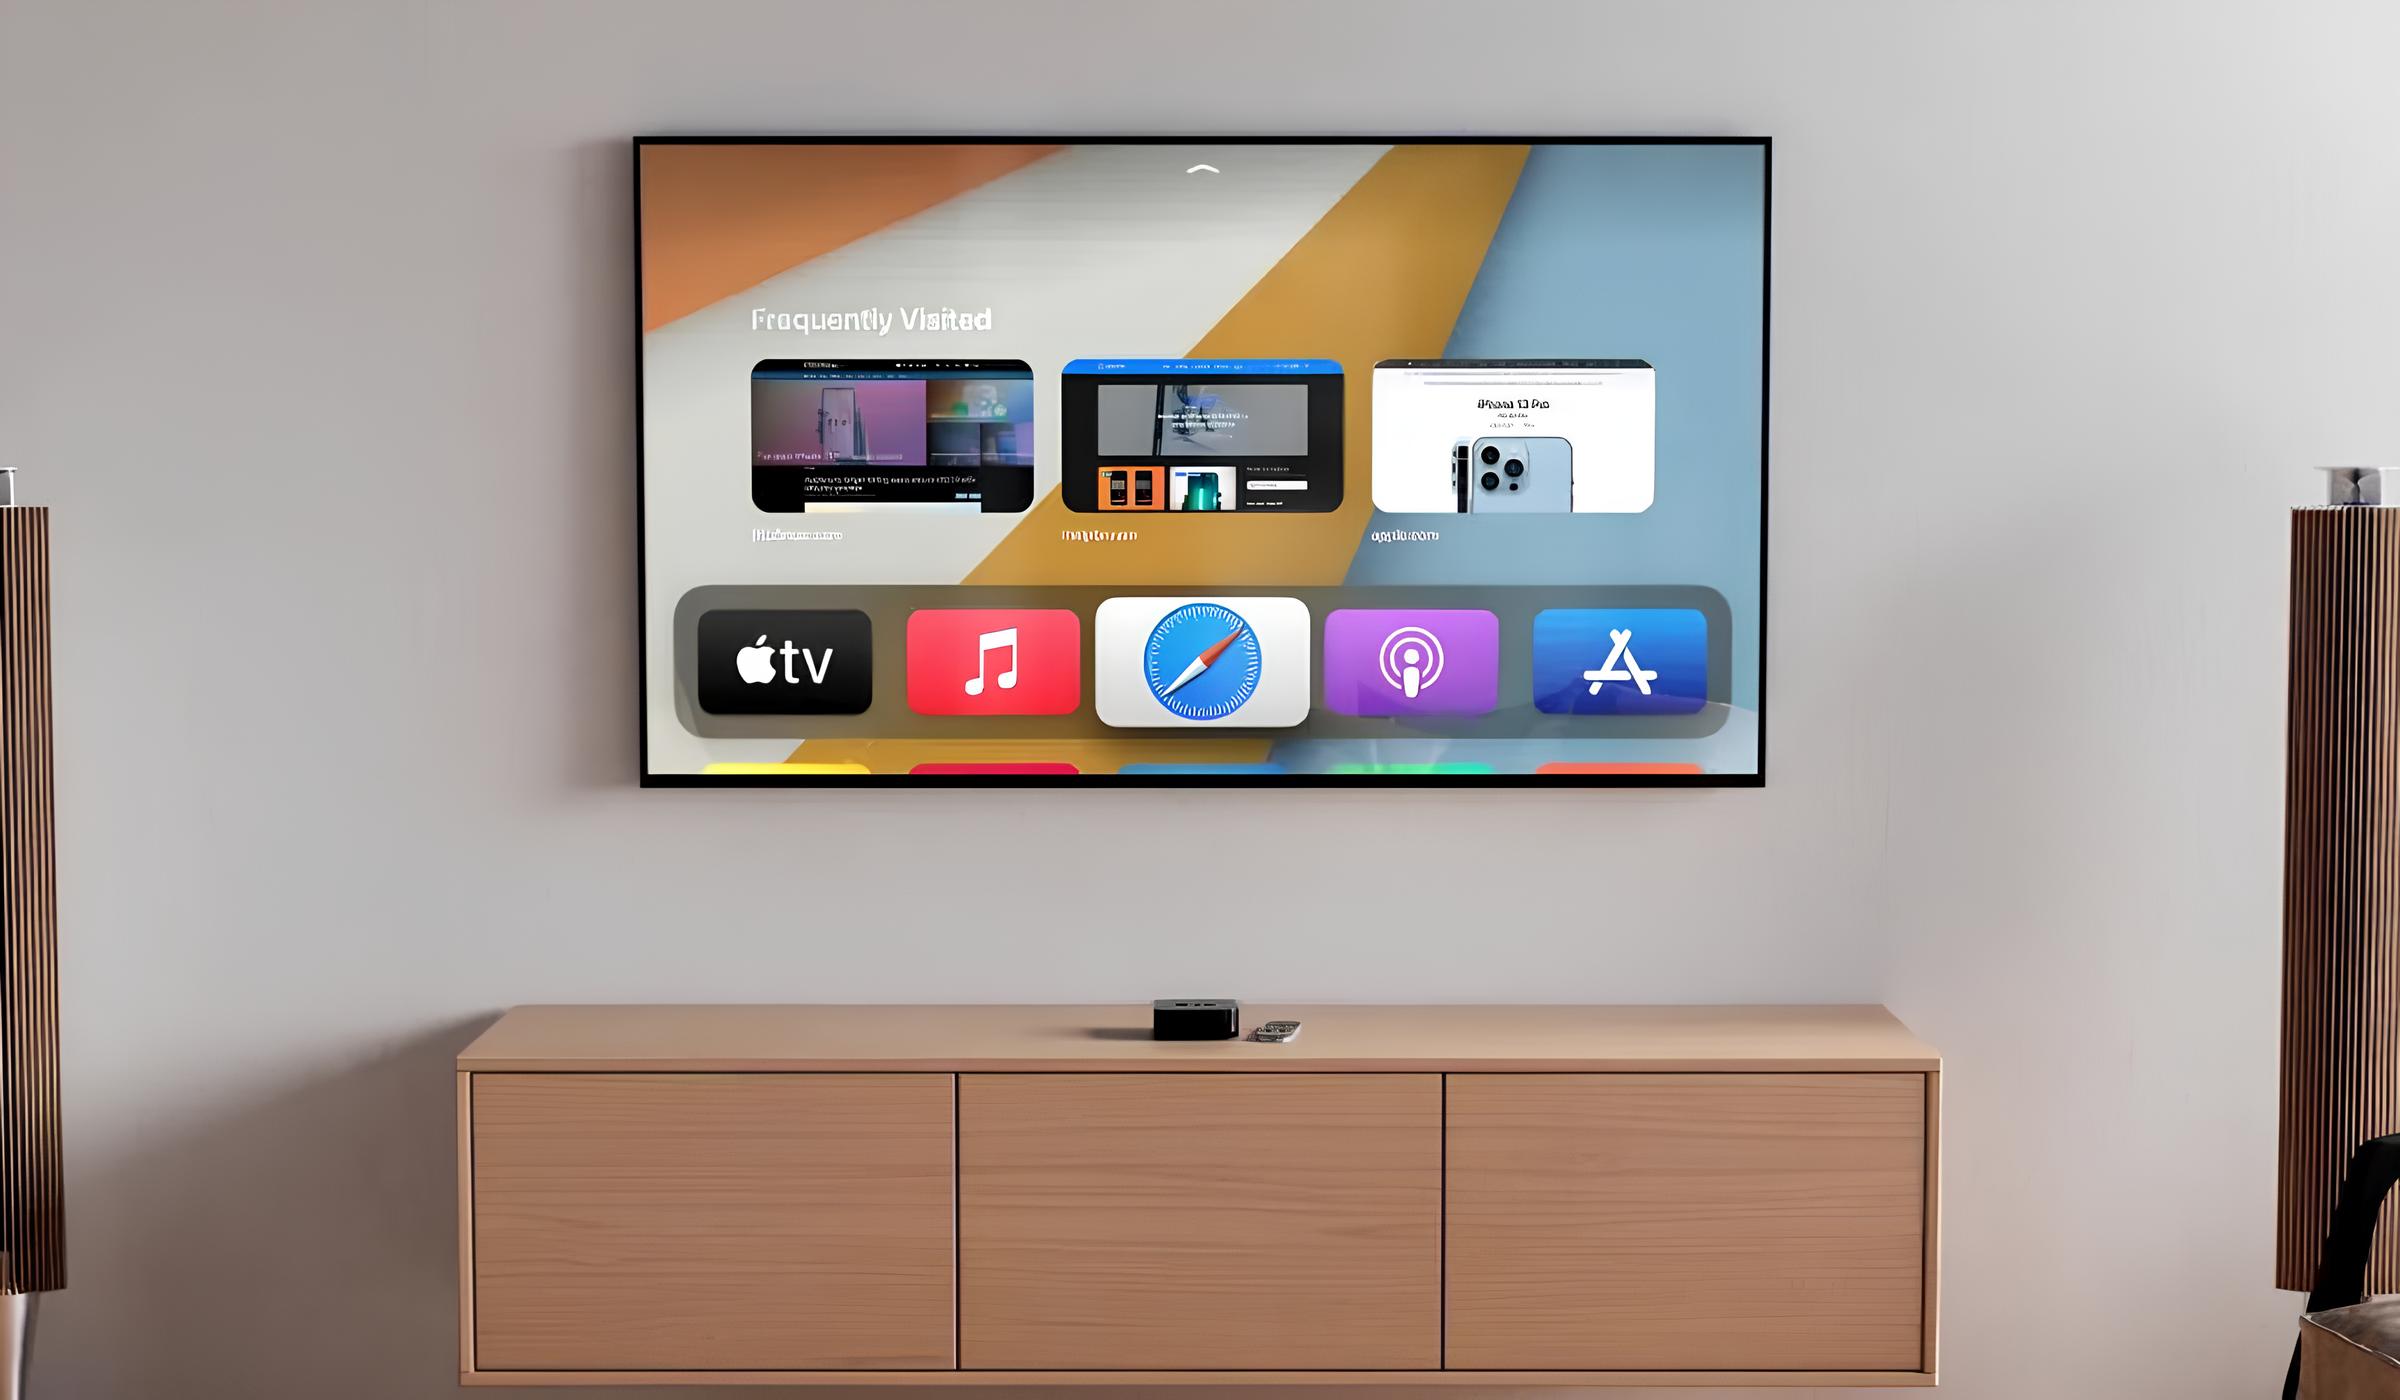 How To Install Safari On Apple TV 4